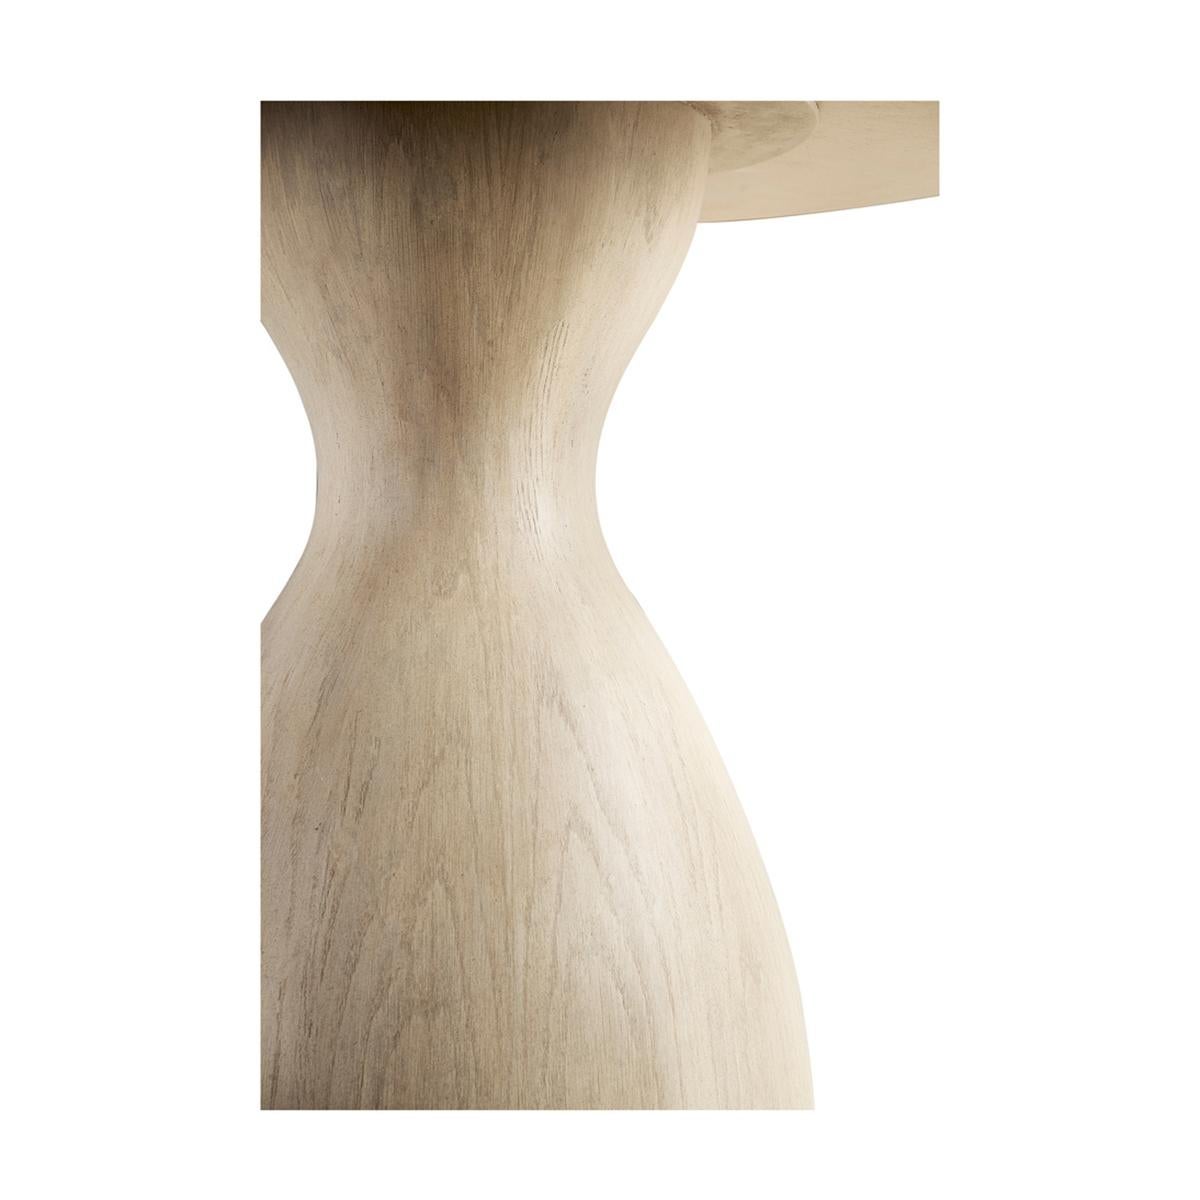 Vietnamese Organic Modern Oak Pedestal Dining Table For Sale